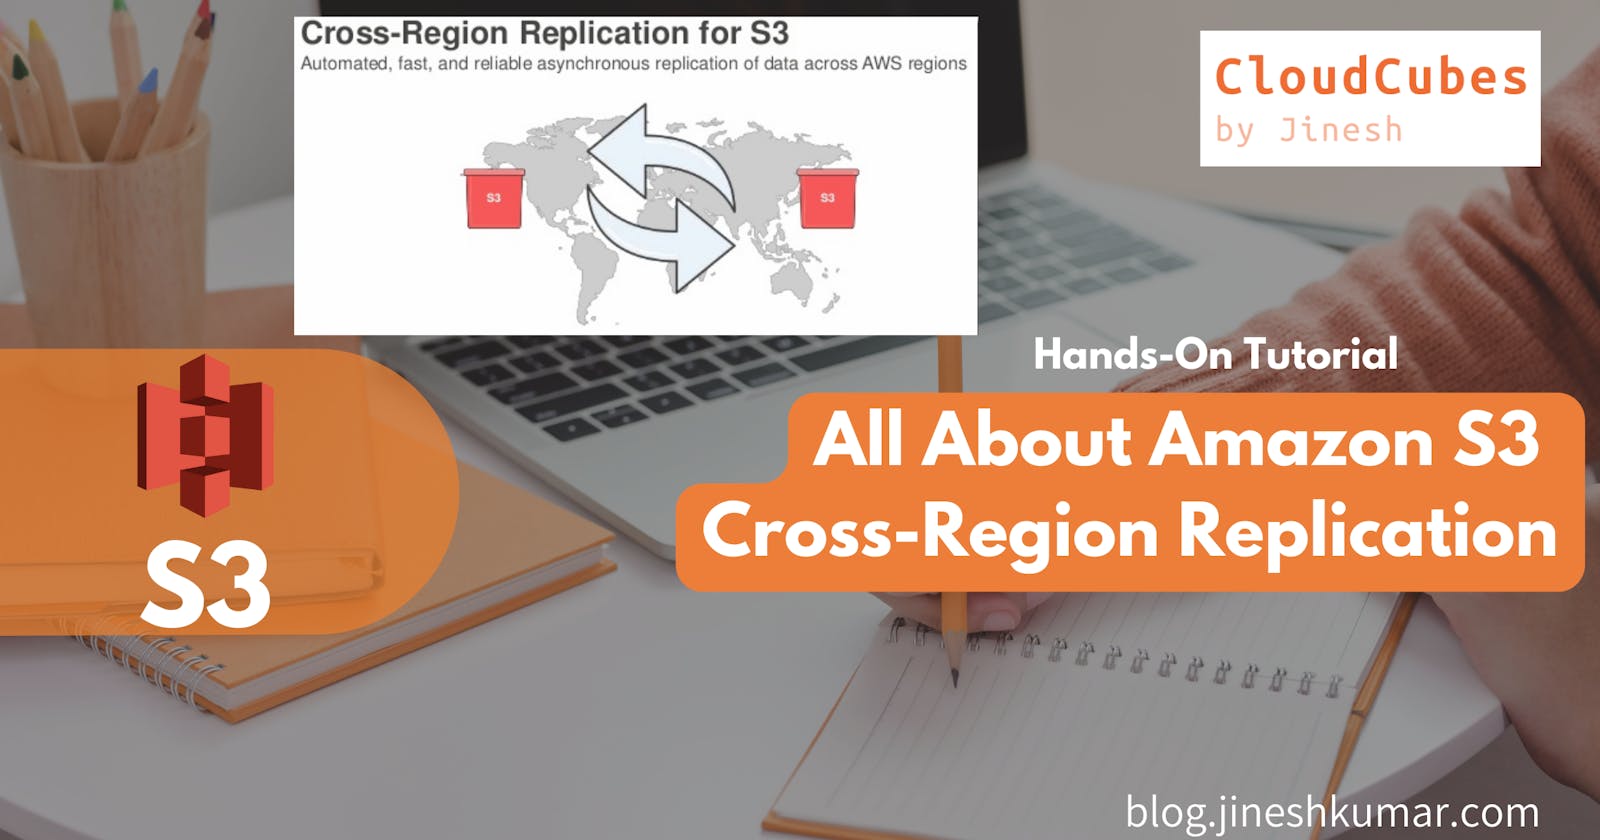 Amazon S3: Cross-Region Replication